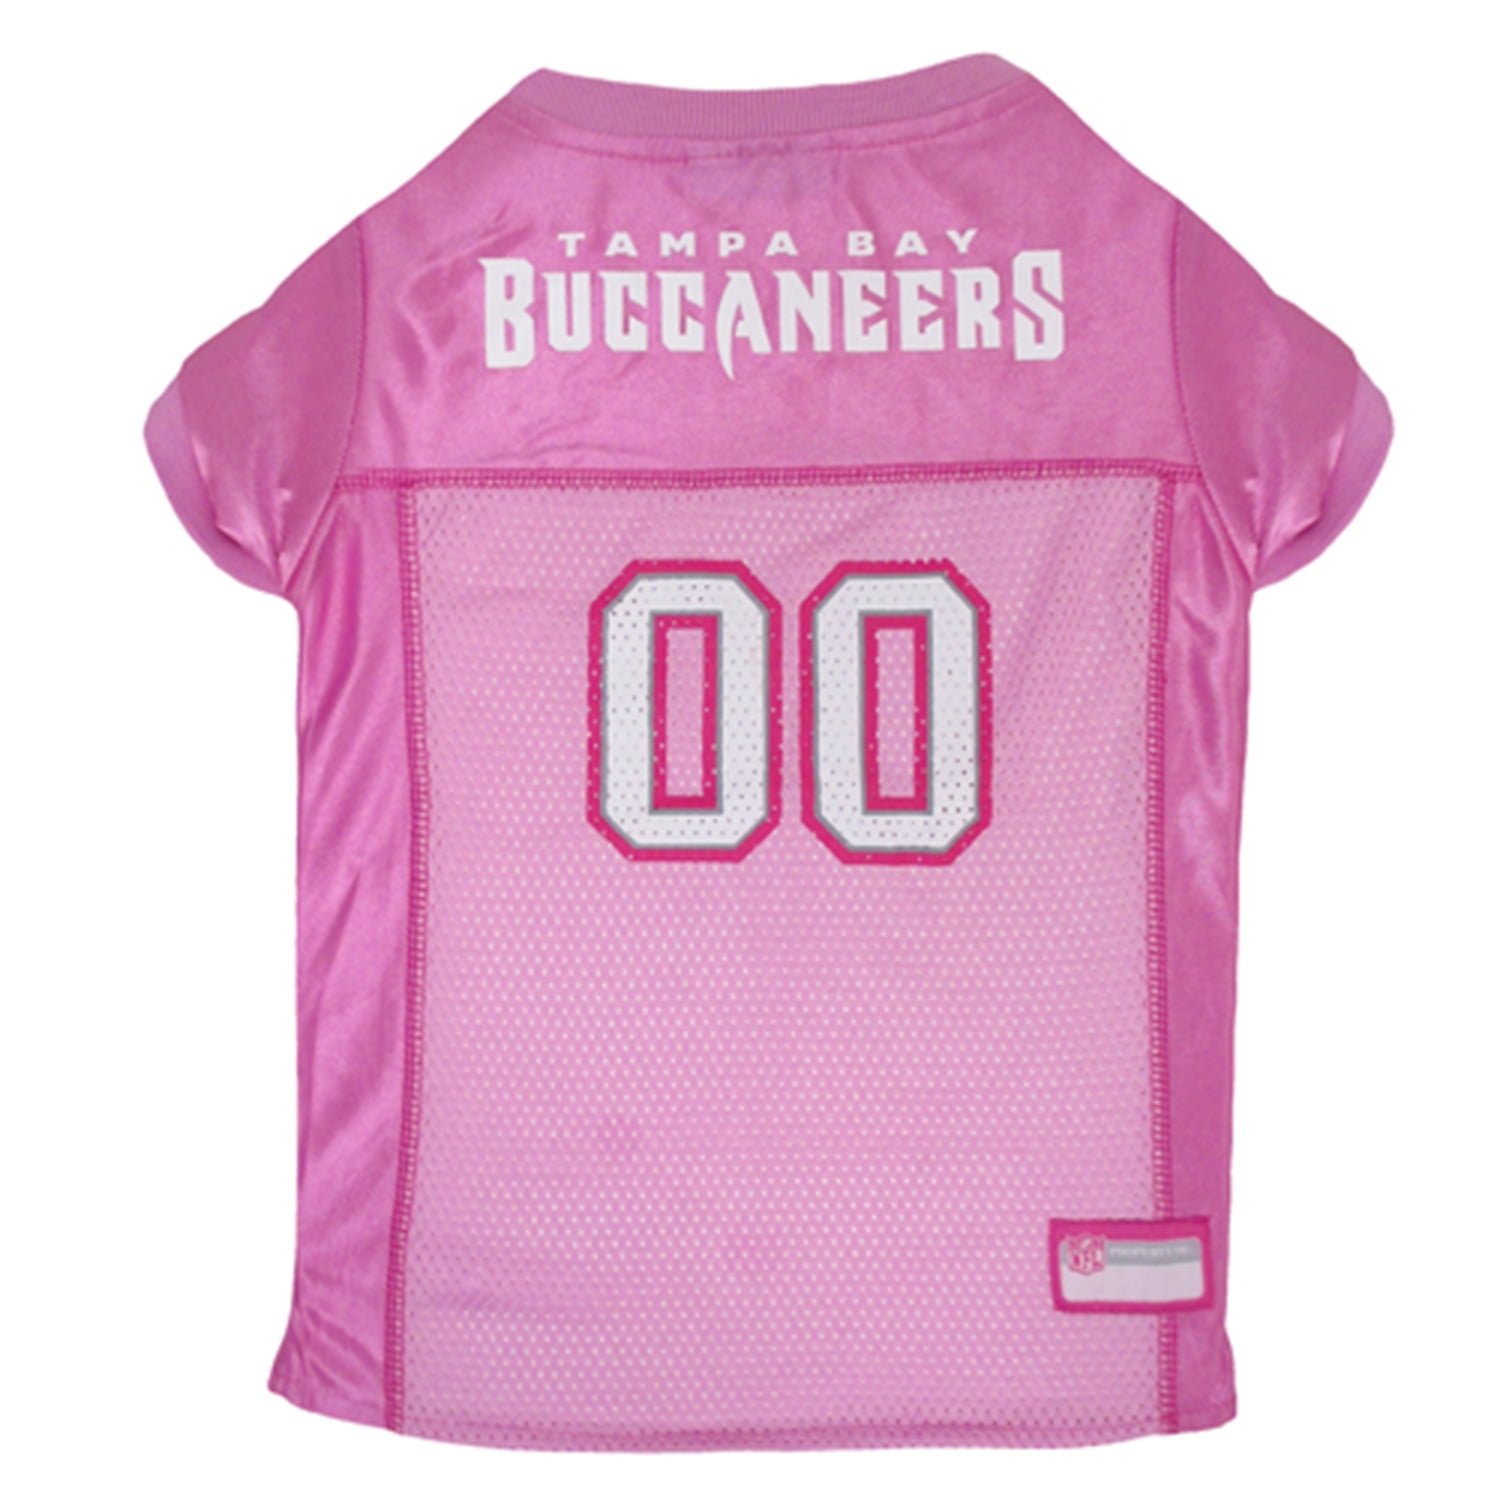 tampa bay buccaneers pink jersey